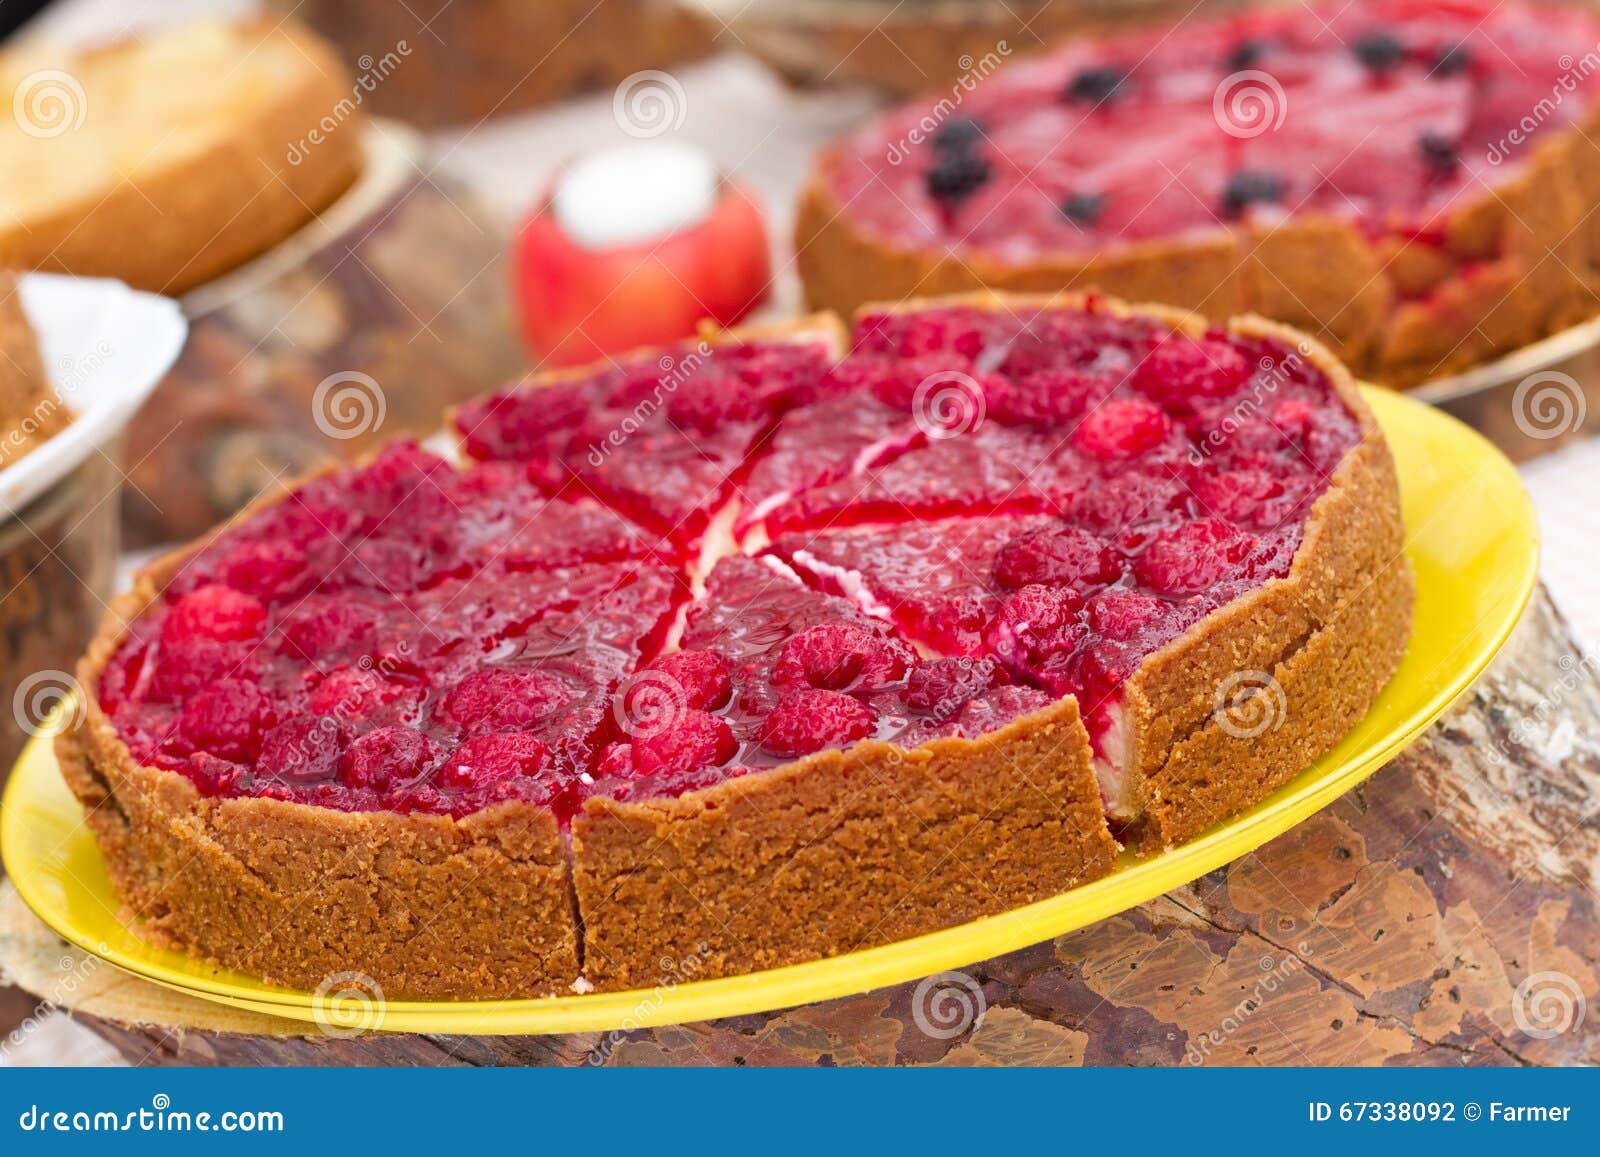 sweet tart with berries